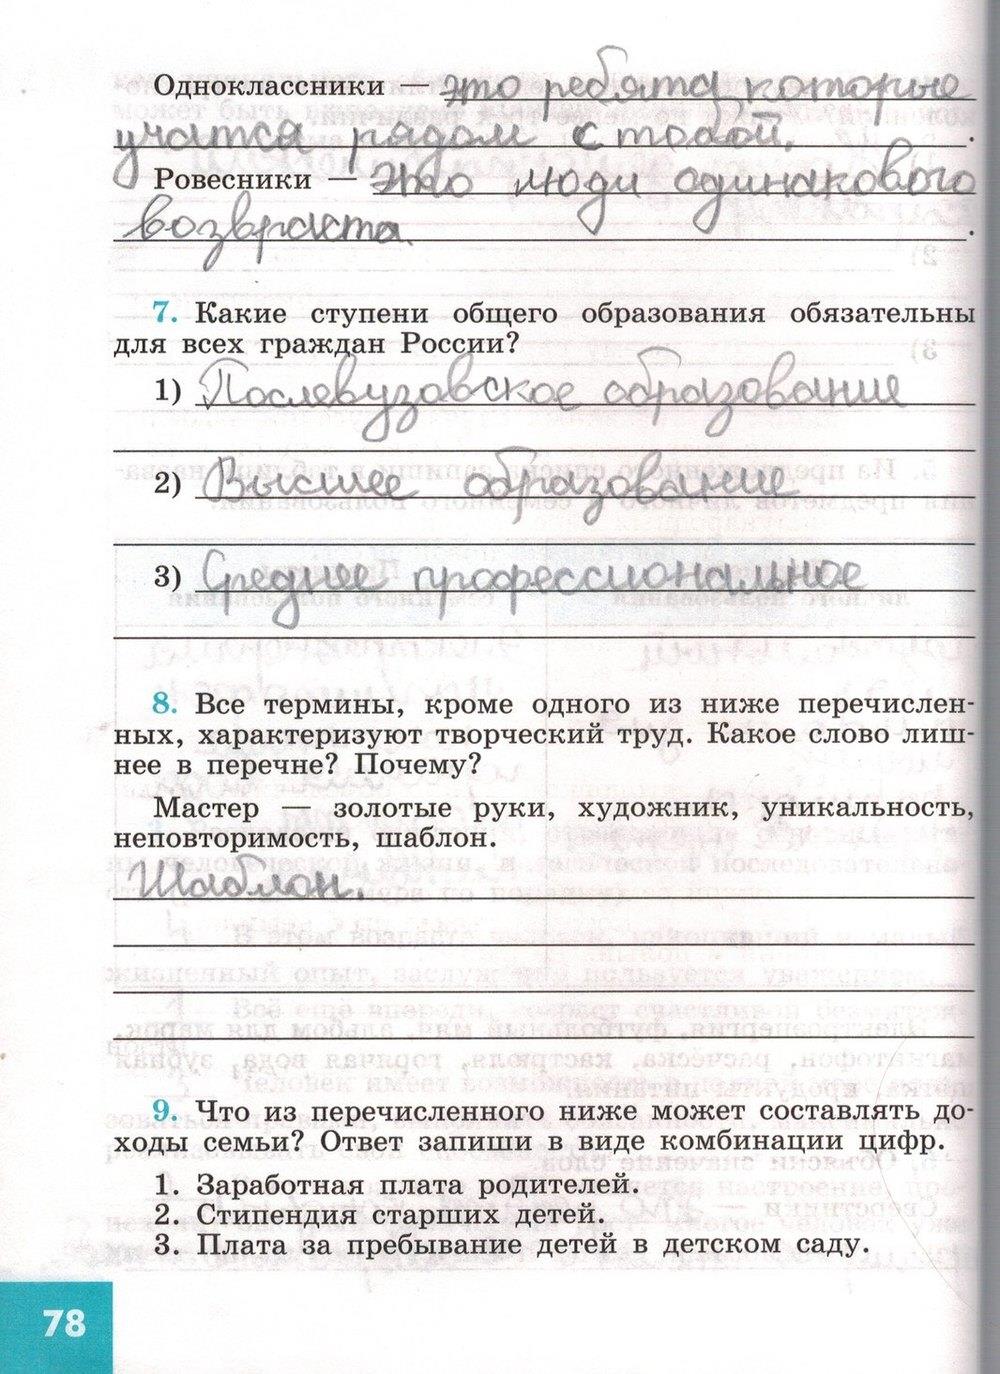 гдз 5 класс рабочая тетрадь страница 78 обществознание Иванова, Хотеенкова